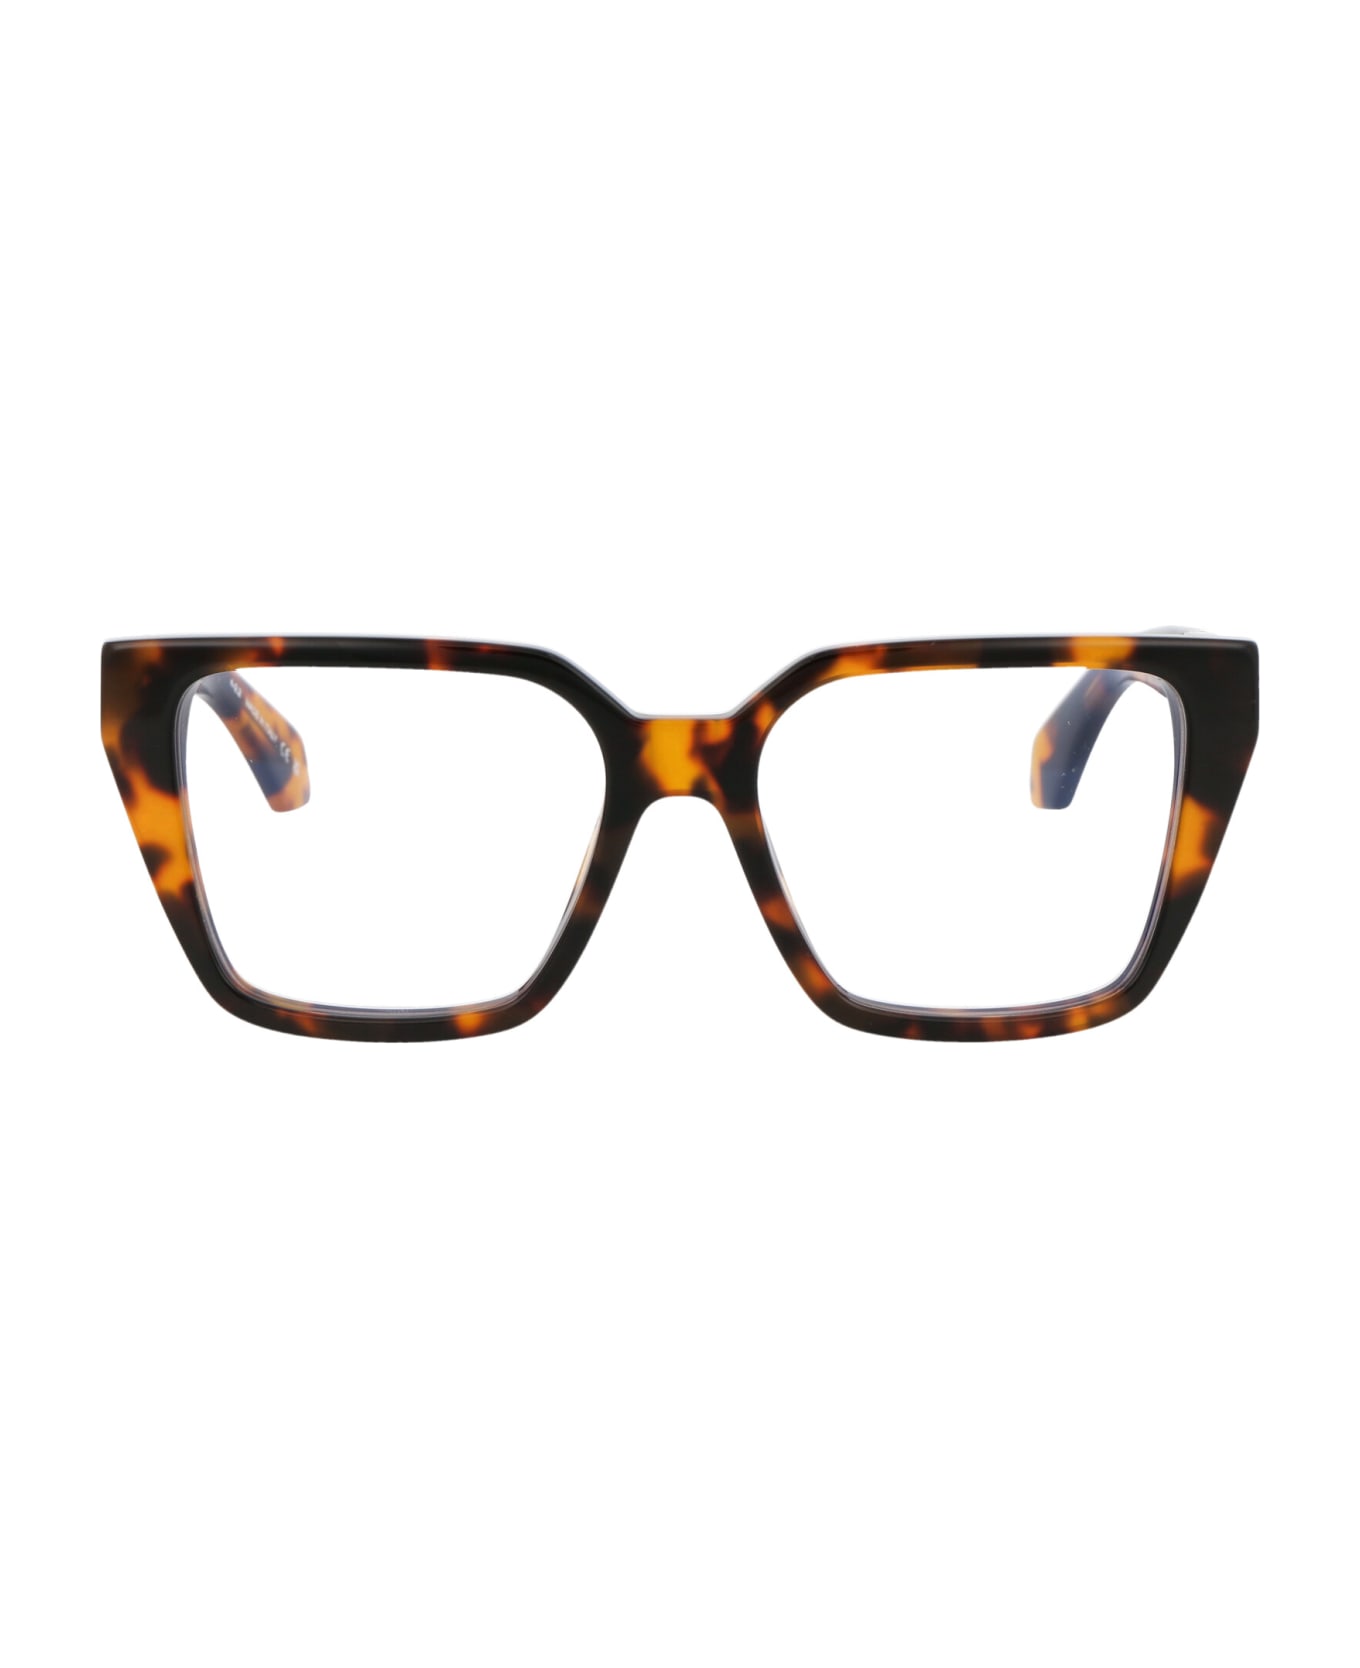 Off-White Optical Style 29 Glasses - 6000 HAVANA BLUE BLOCK アイウェア